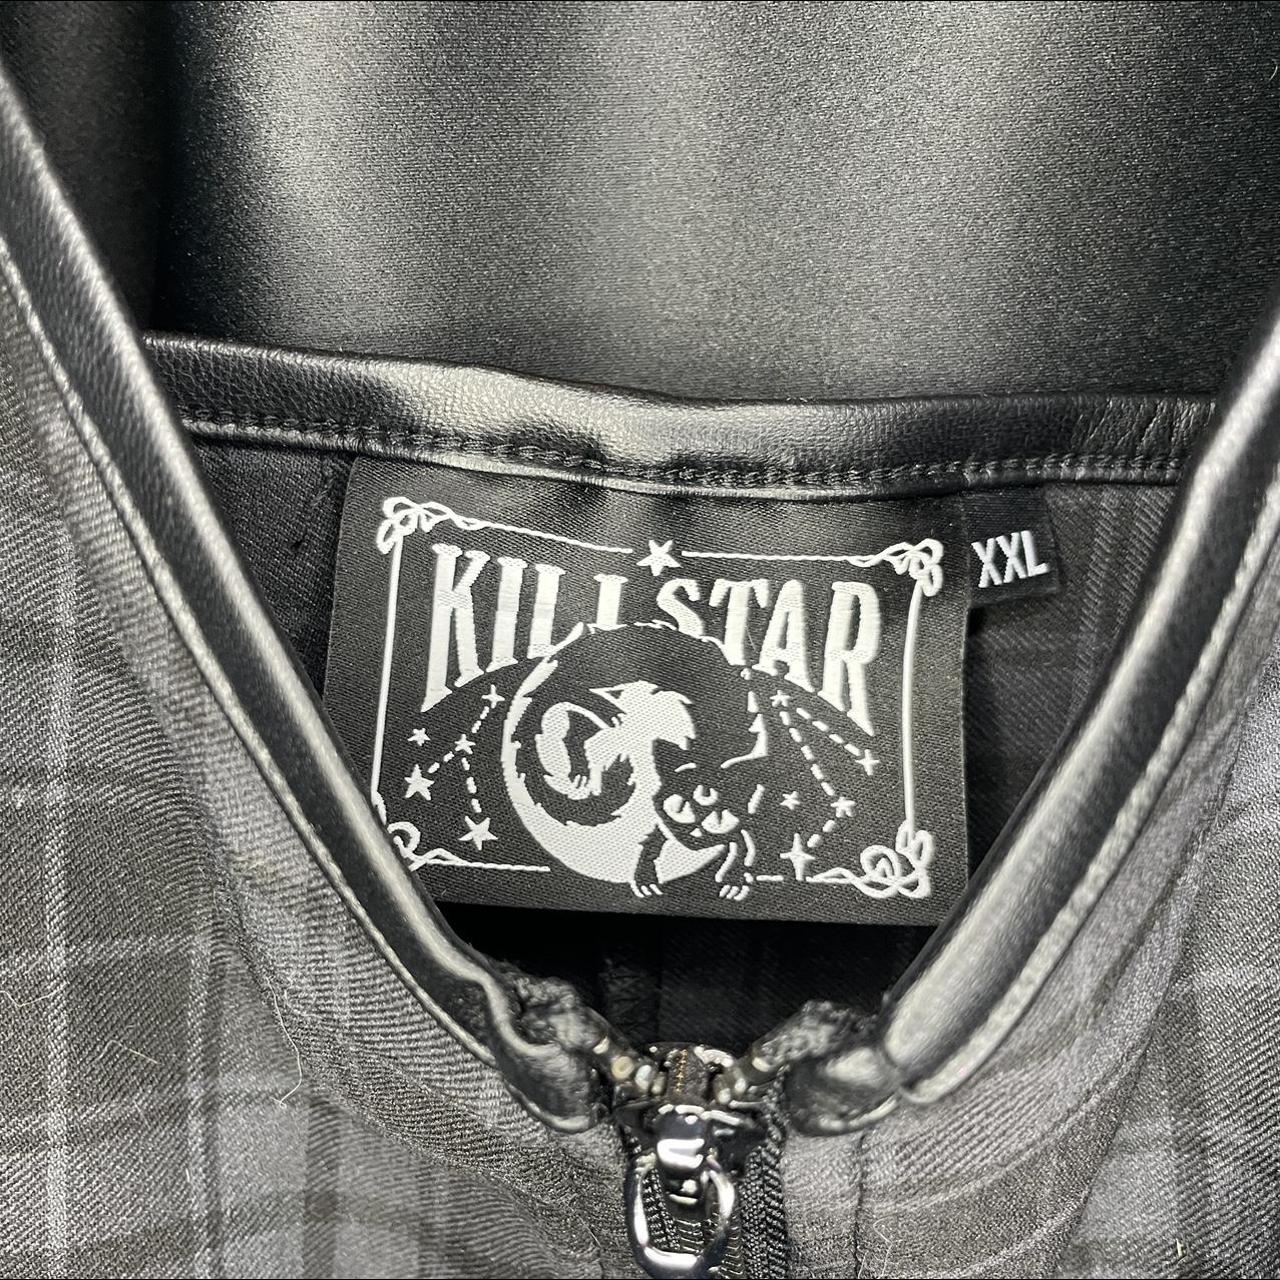 Killstar Women's Black and Grey Dress (3)